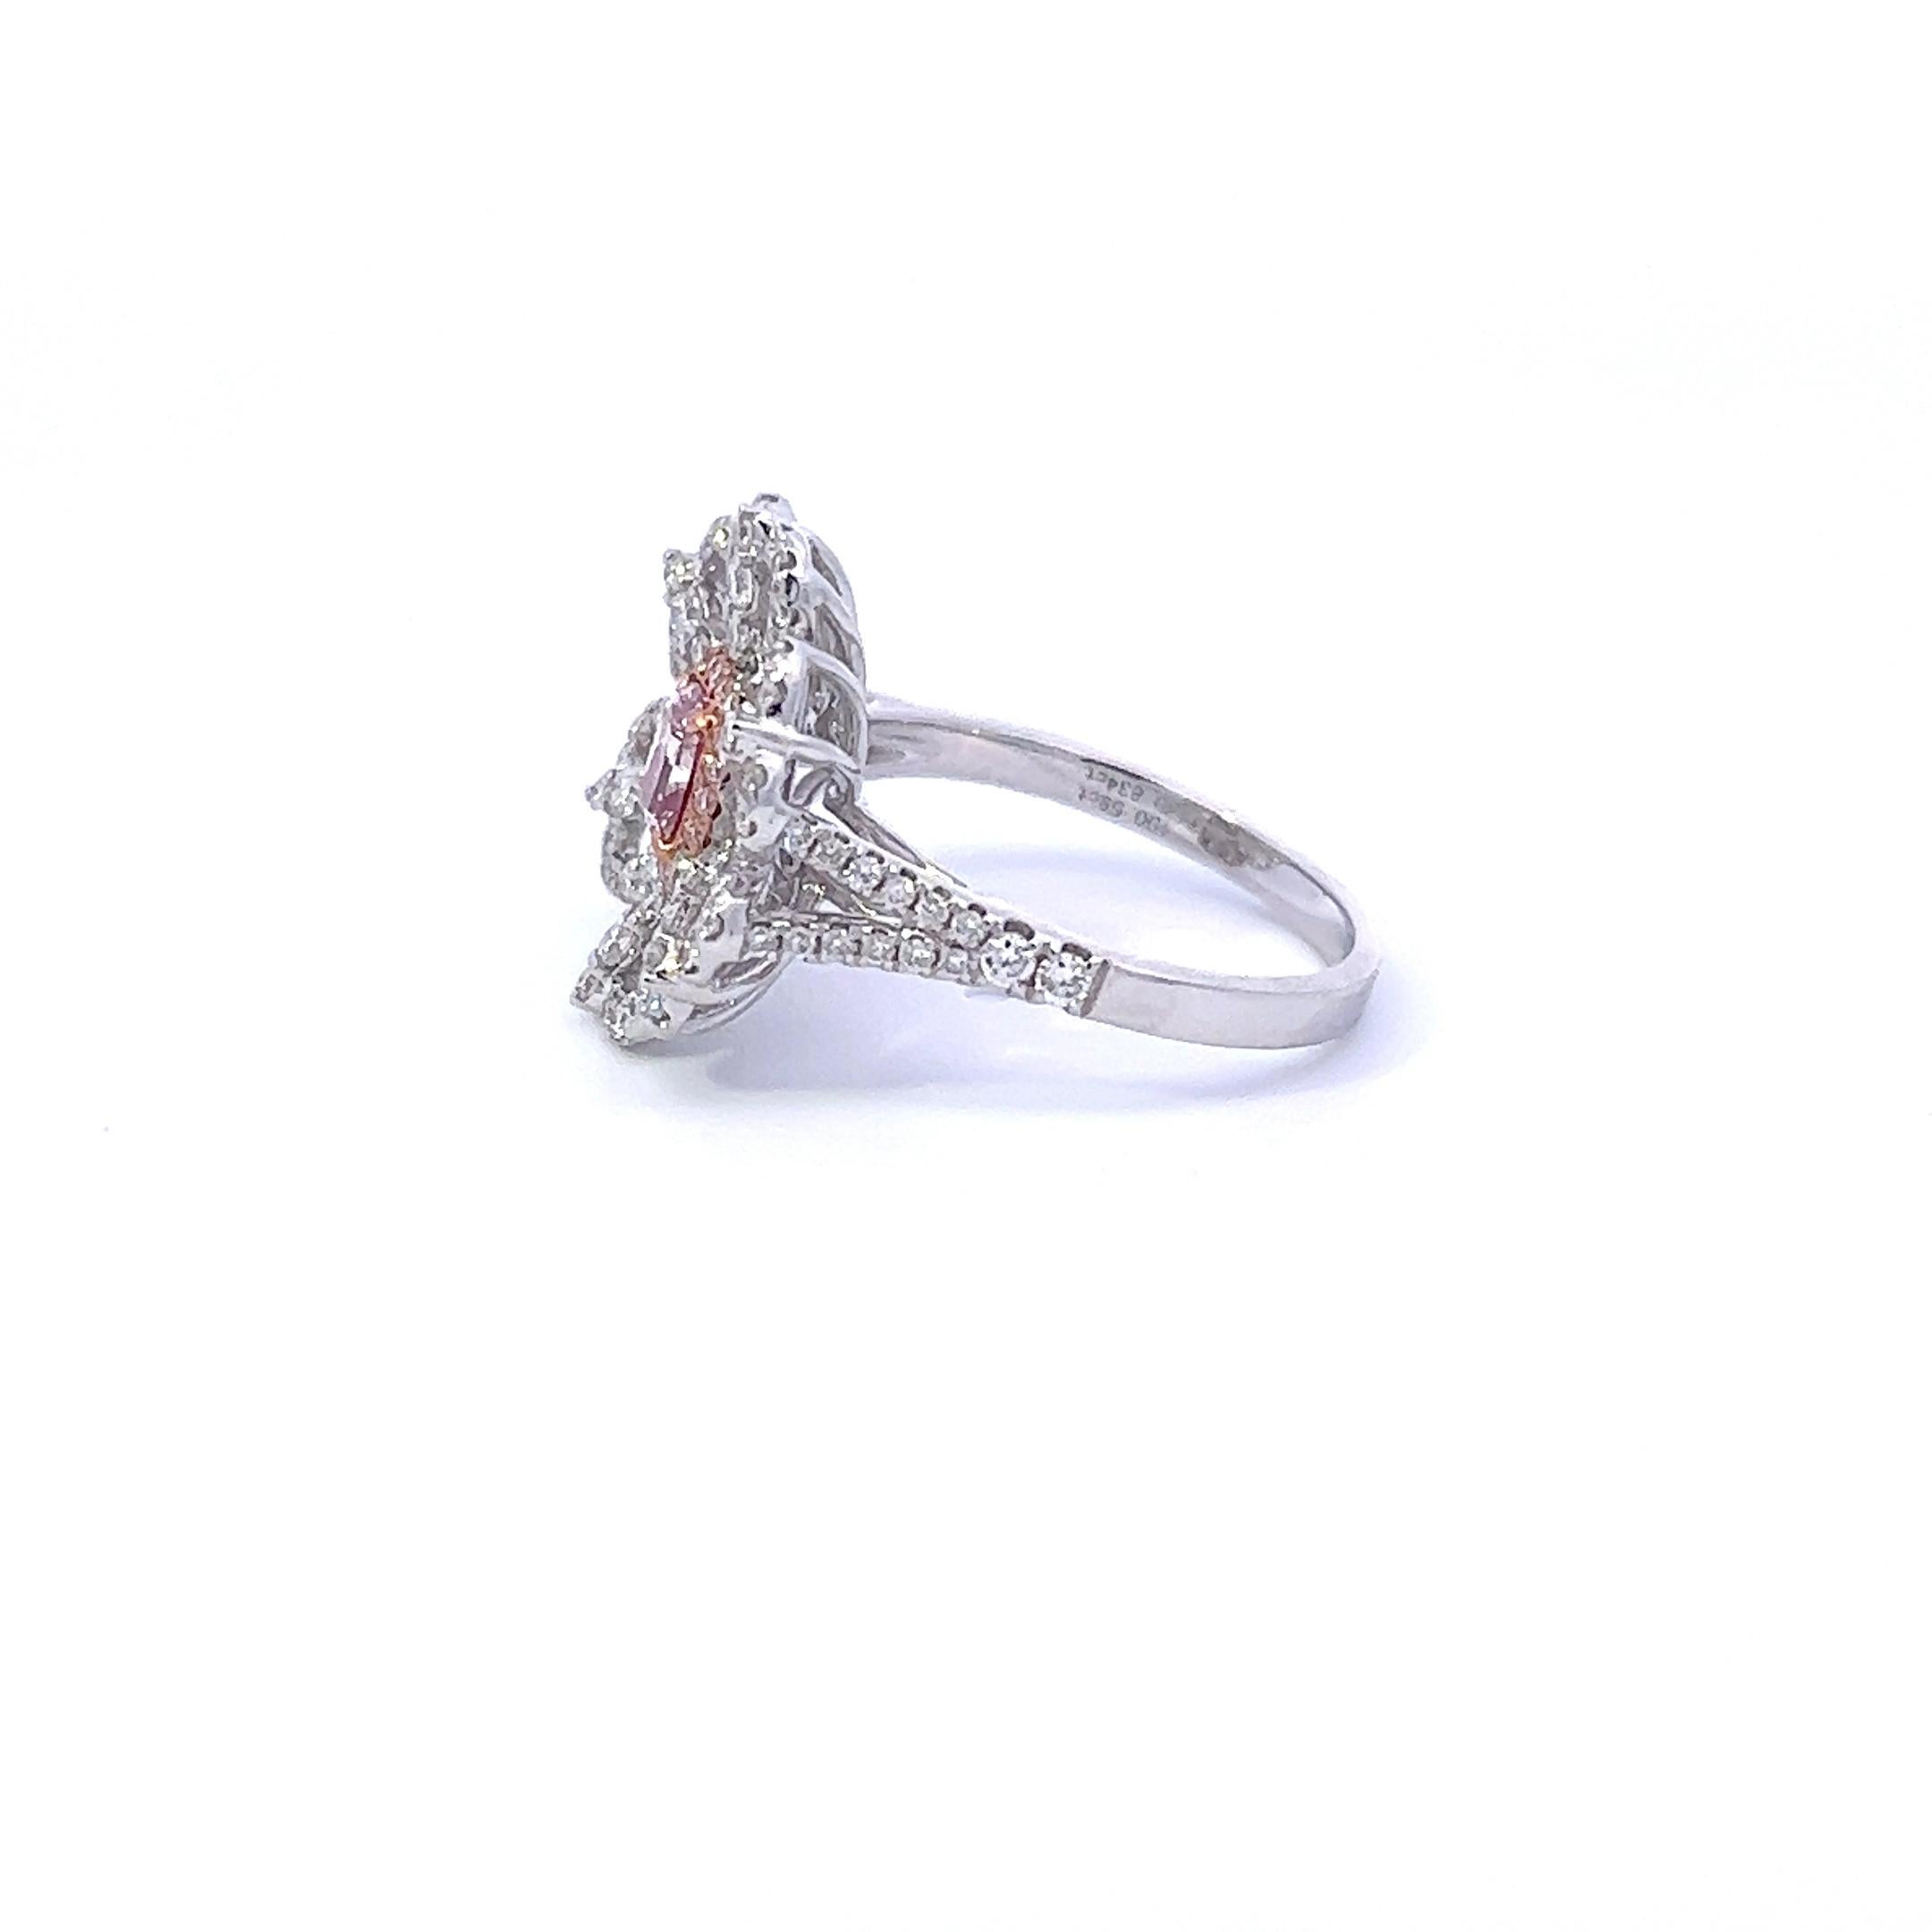 Cushion Cut GIA Certified 0.59 Carat Light Pink Diamond Ring For Sale